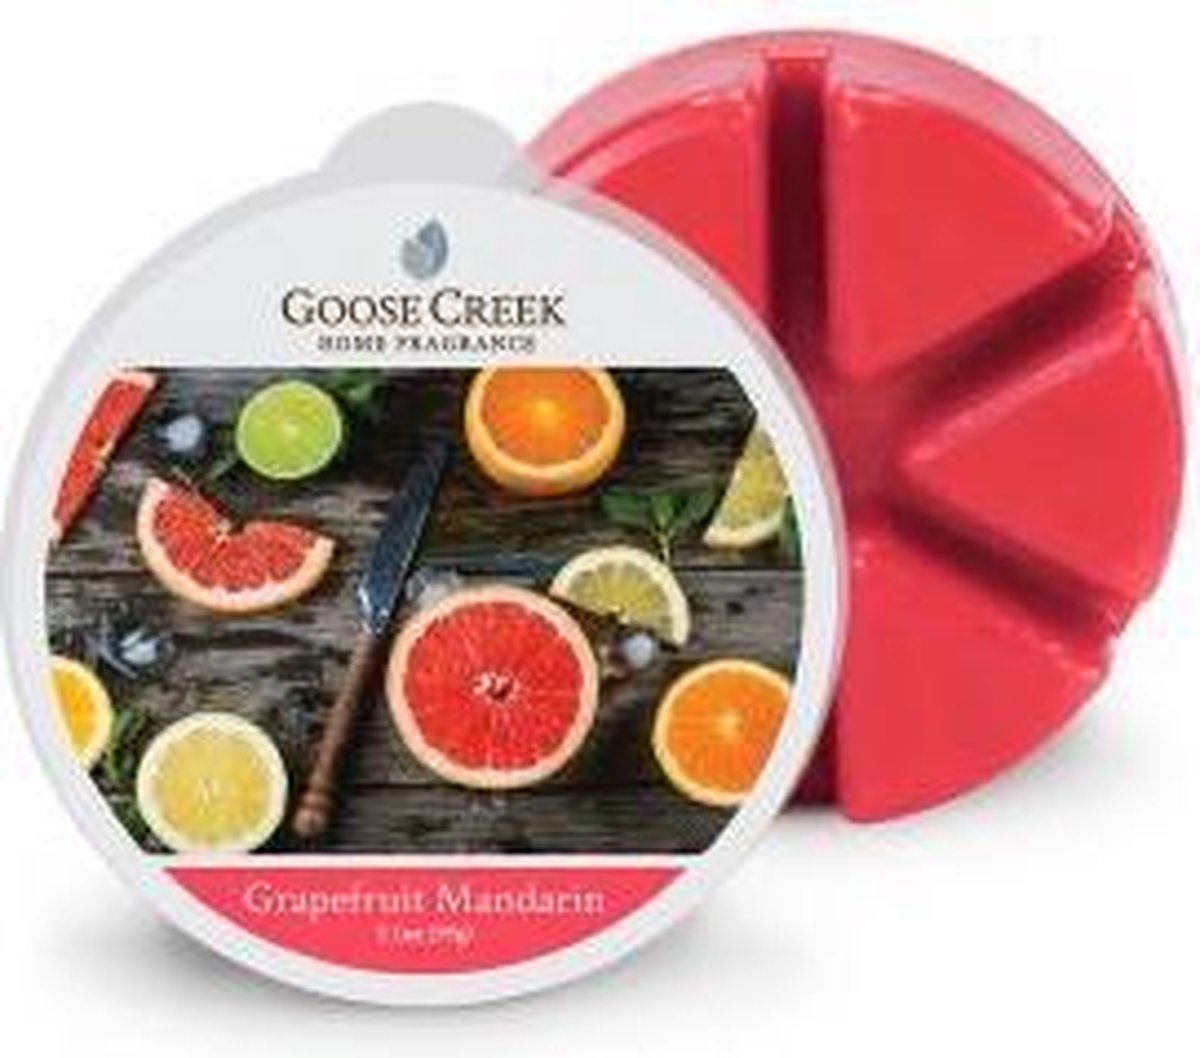 Goose Creek Wax Melt Grapefruit Mandarin Brandtijd 80-90 uur